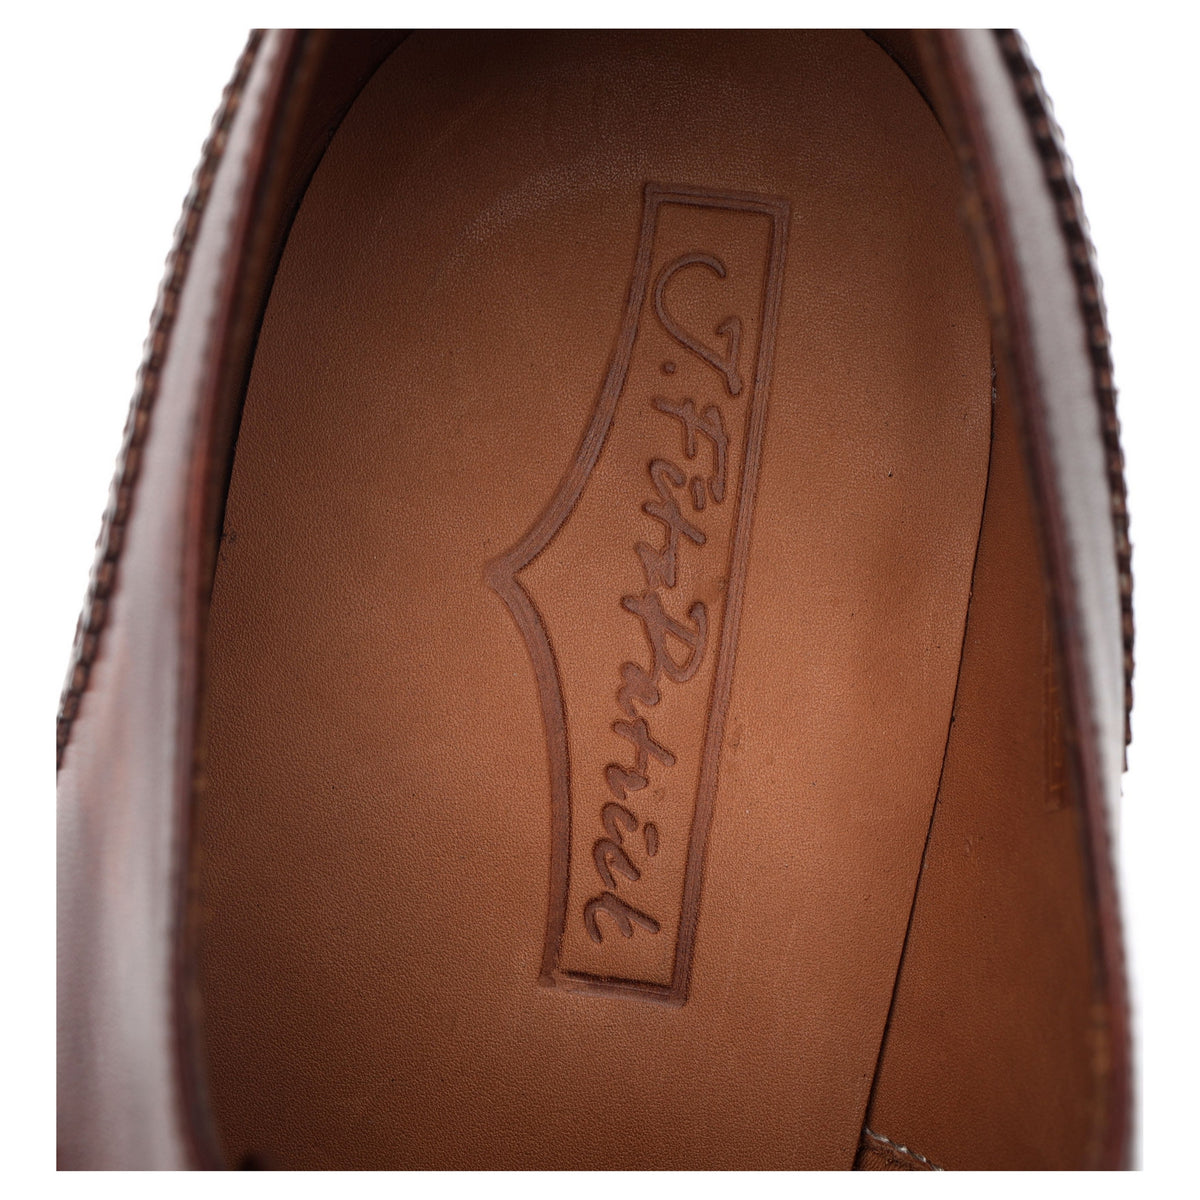 &#39;Windermere&#39; Brown Museum Leather Oxford Semi Brogues UK 7 E